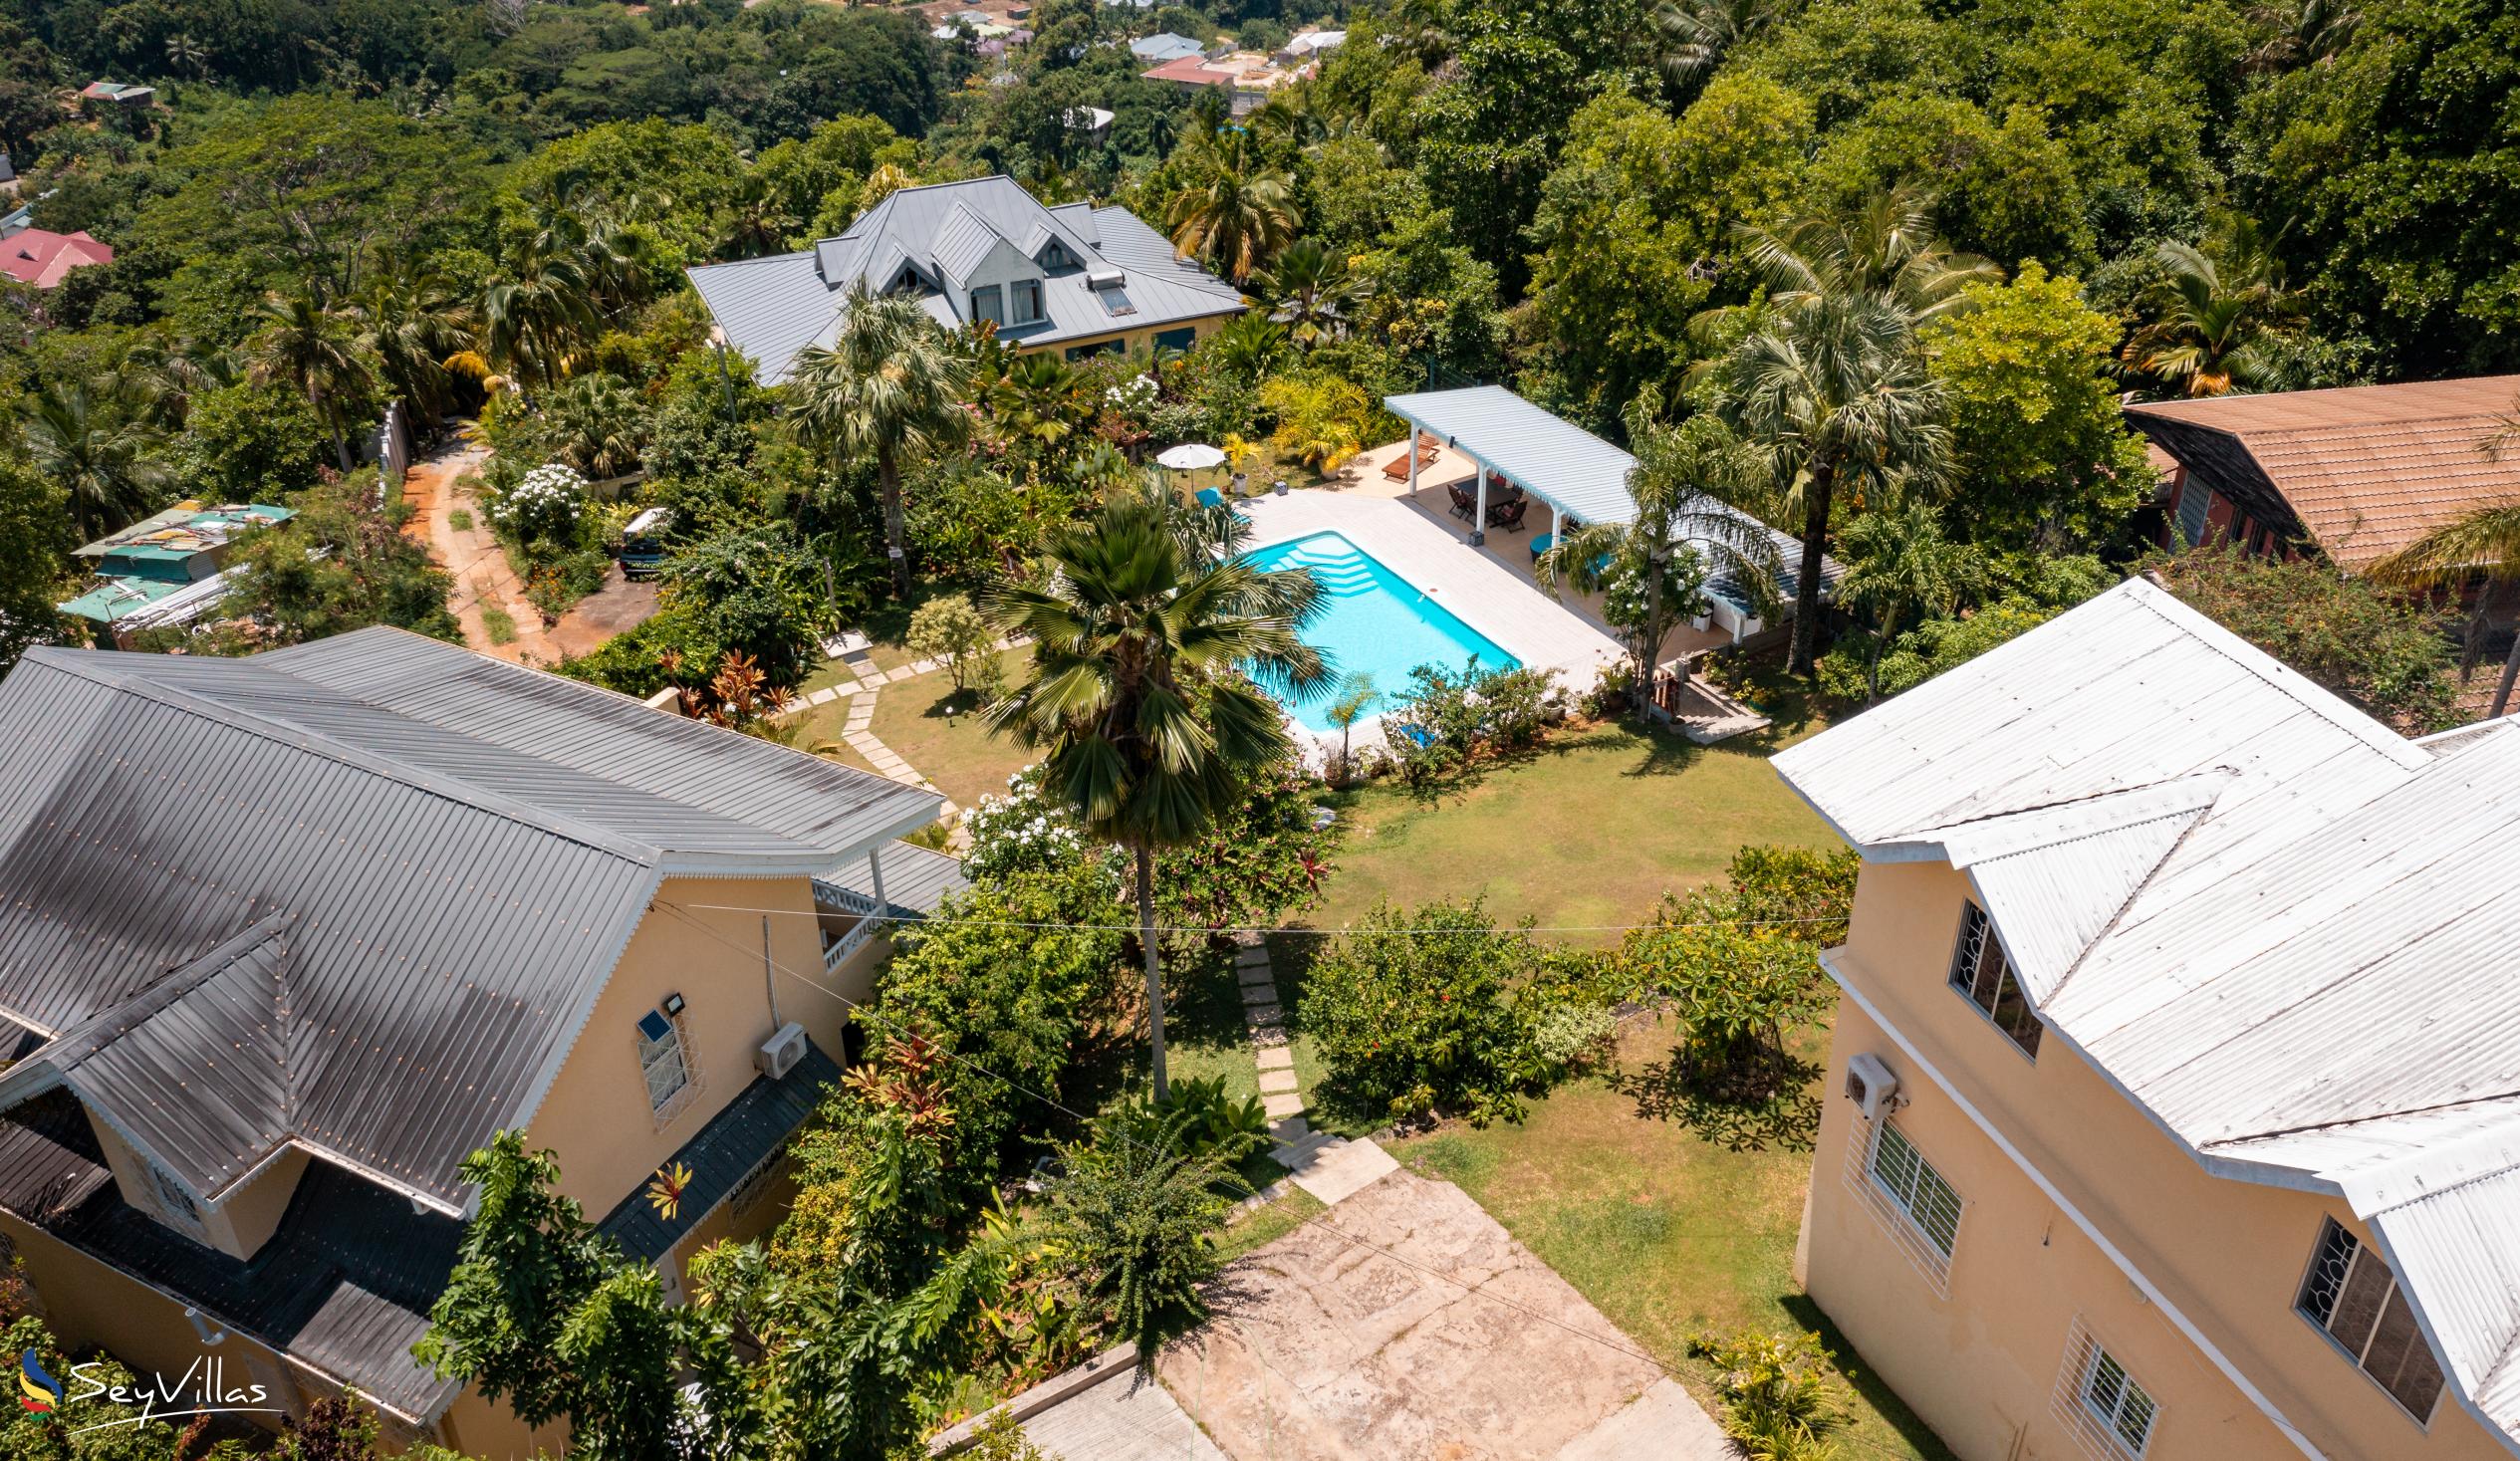 Photo 6: Residence Monte Cristo - Outdoor area - Mahé (Seychelles)